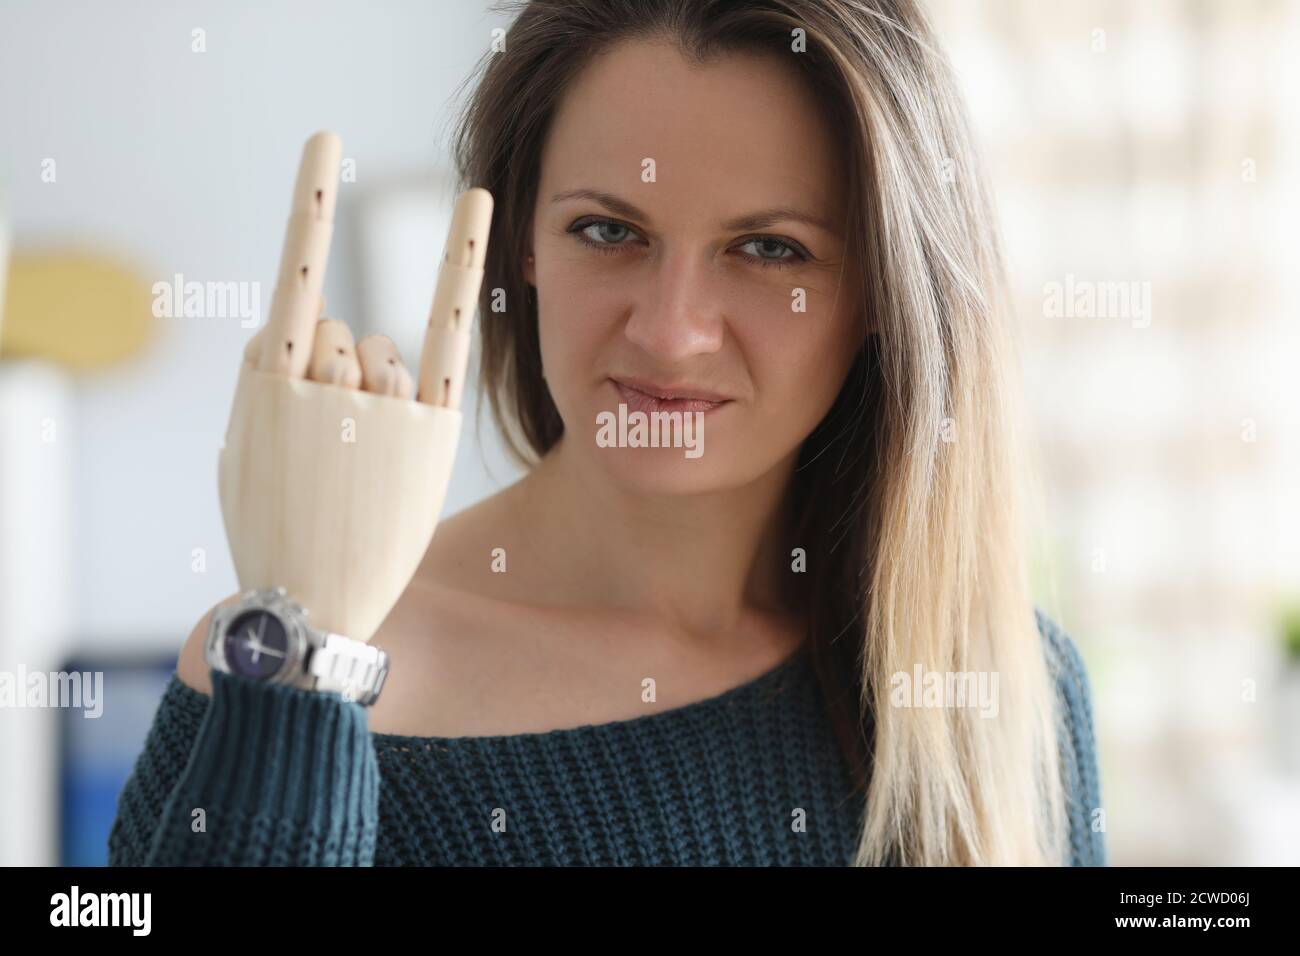 Behinderte junge Frau zeigt hölzerne Prothese Geste Porträt Stockfoto